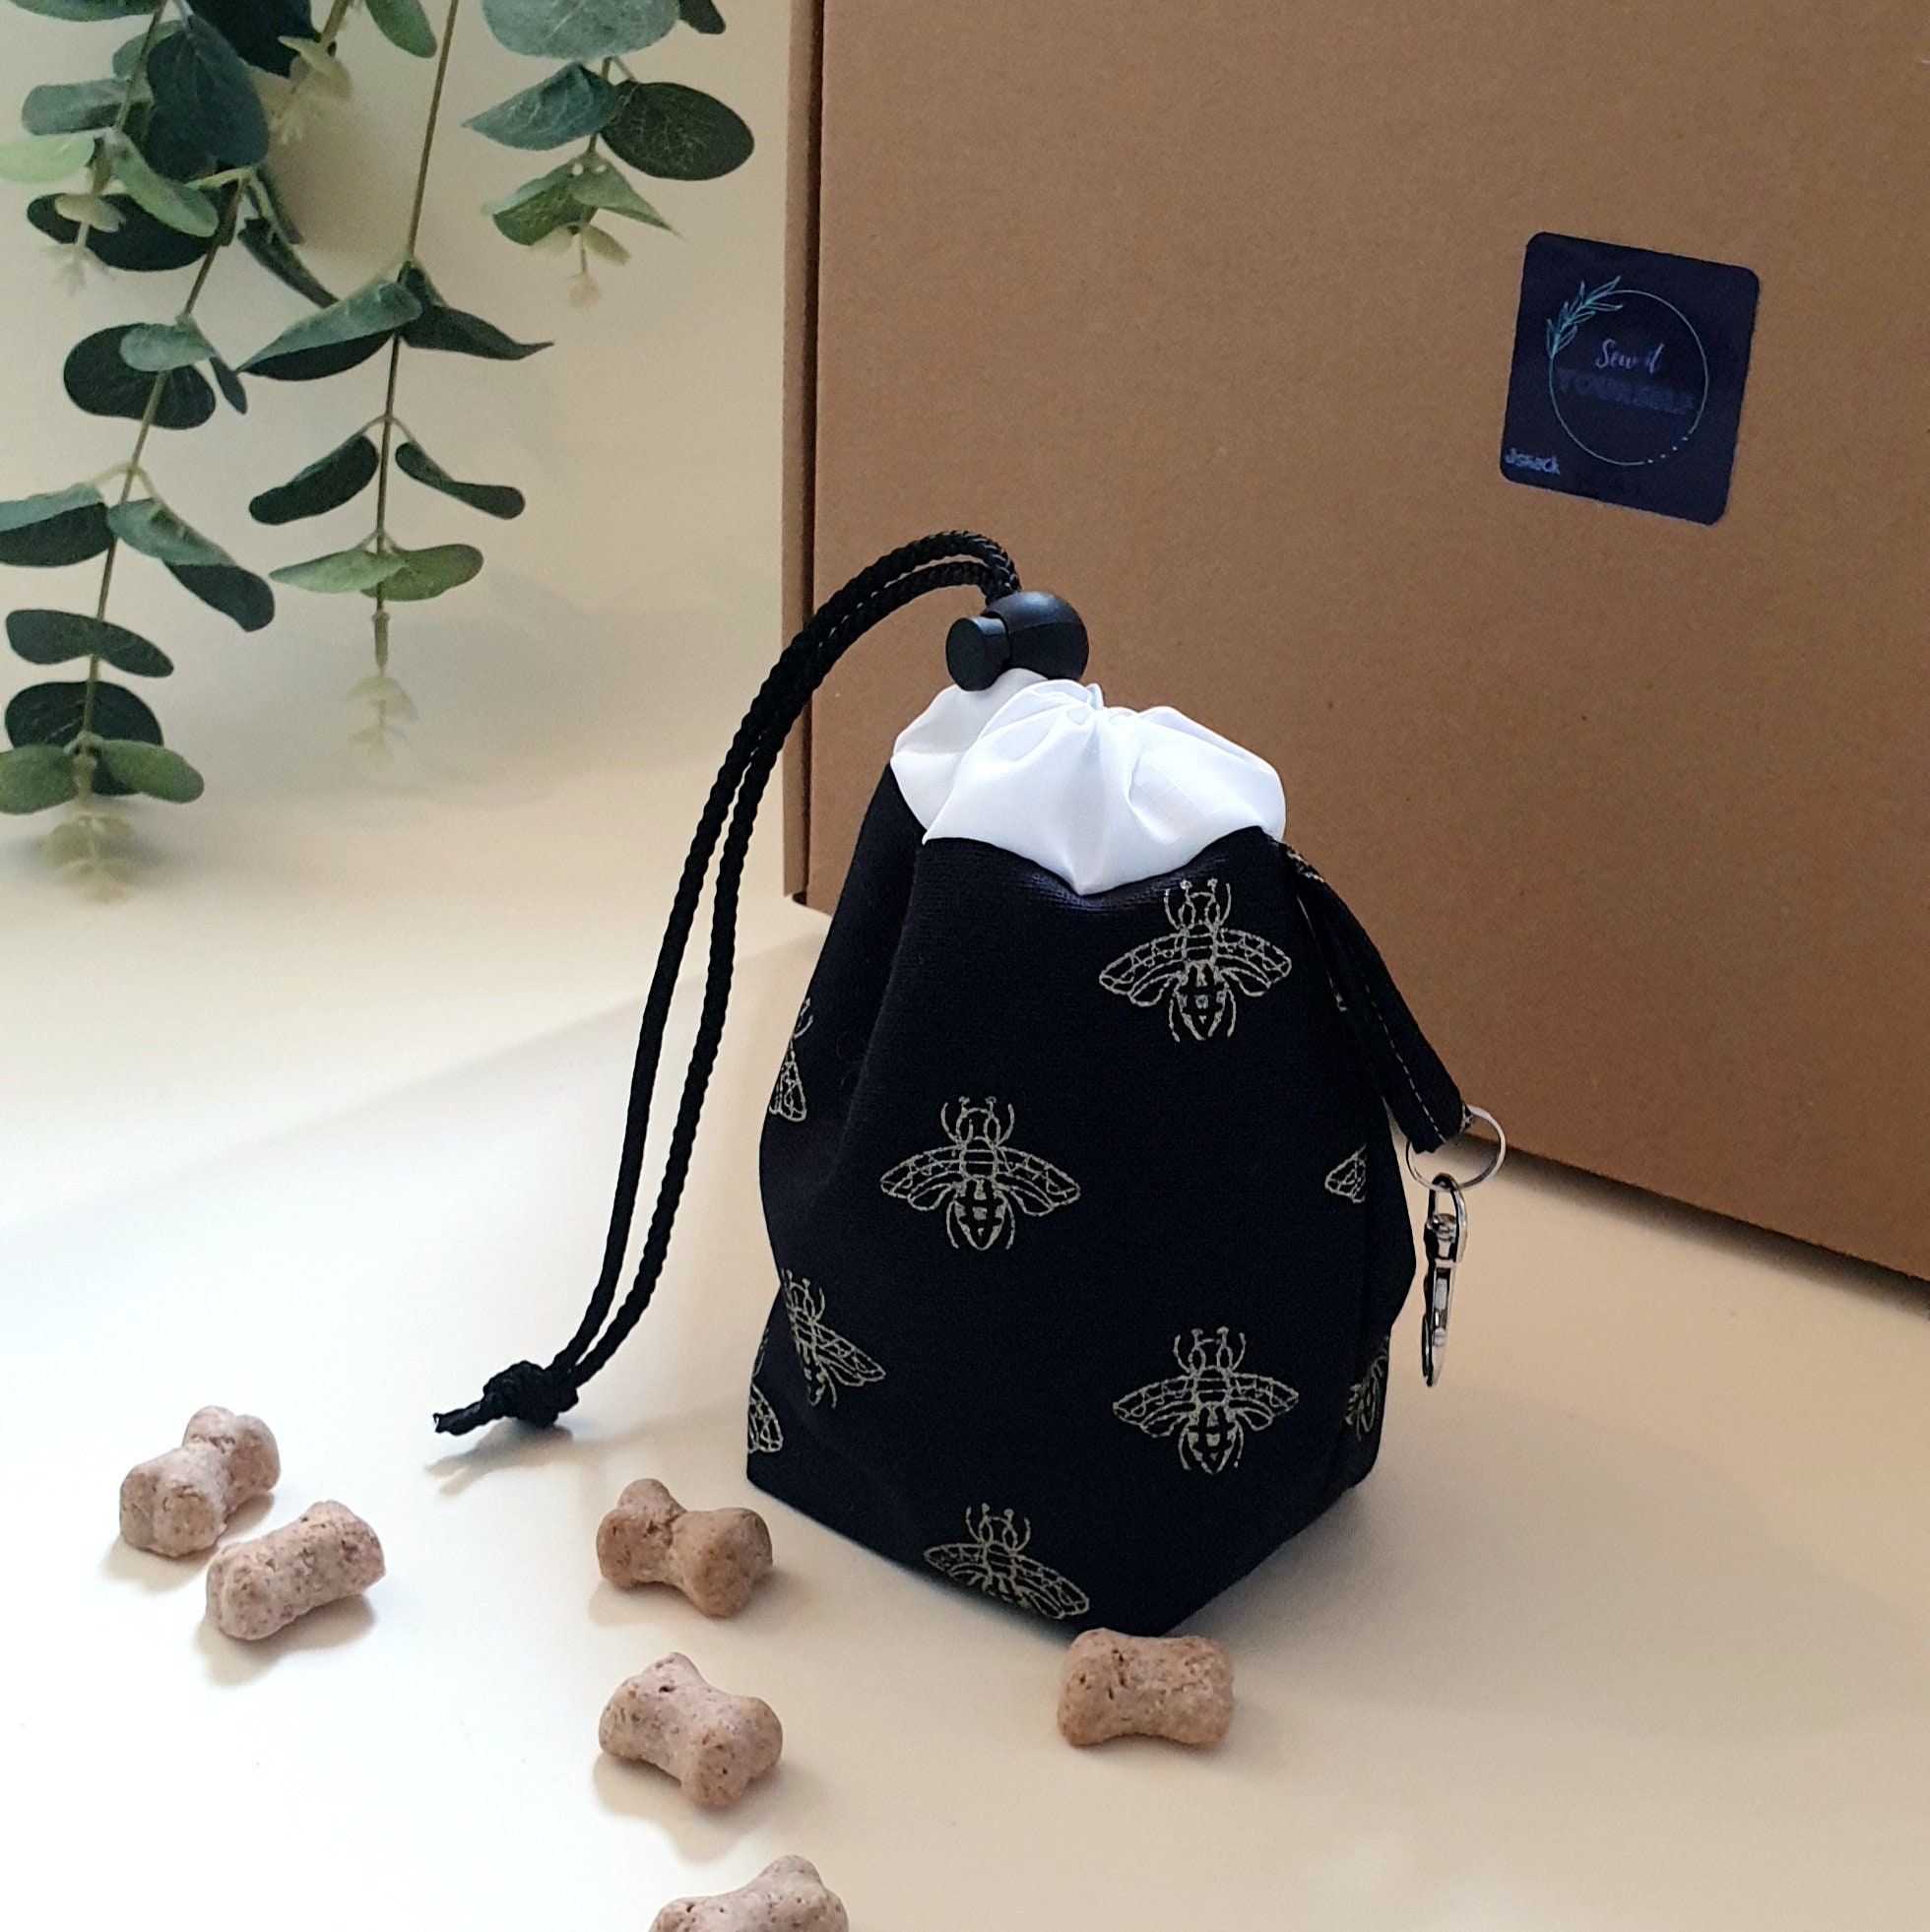 Make Your Own Poop Bag Holder in Blue or Pink, Crafting Kits for